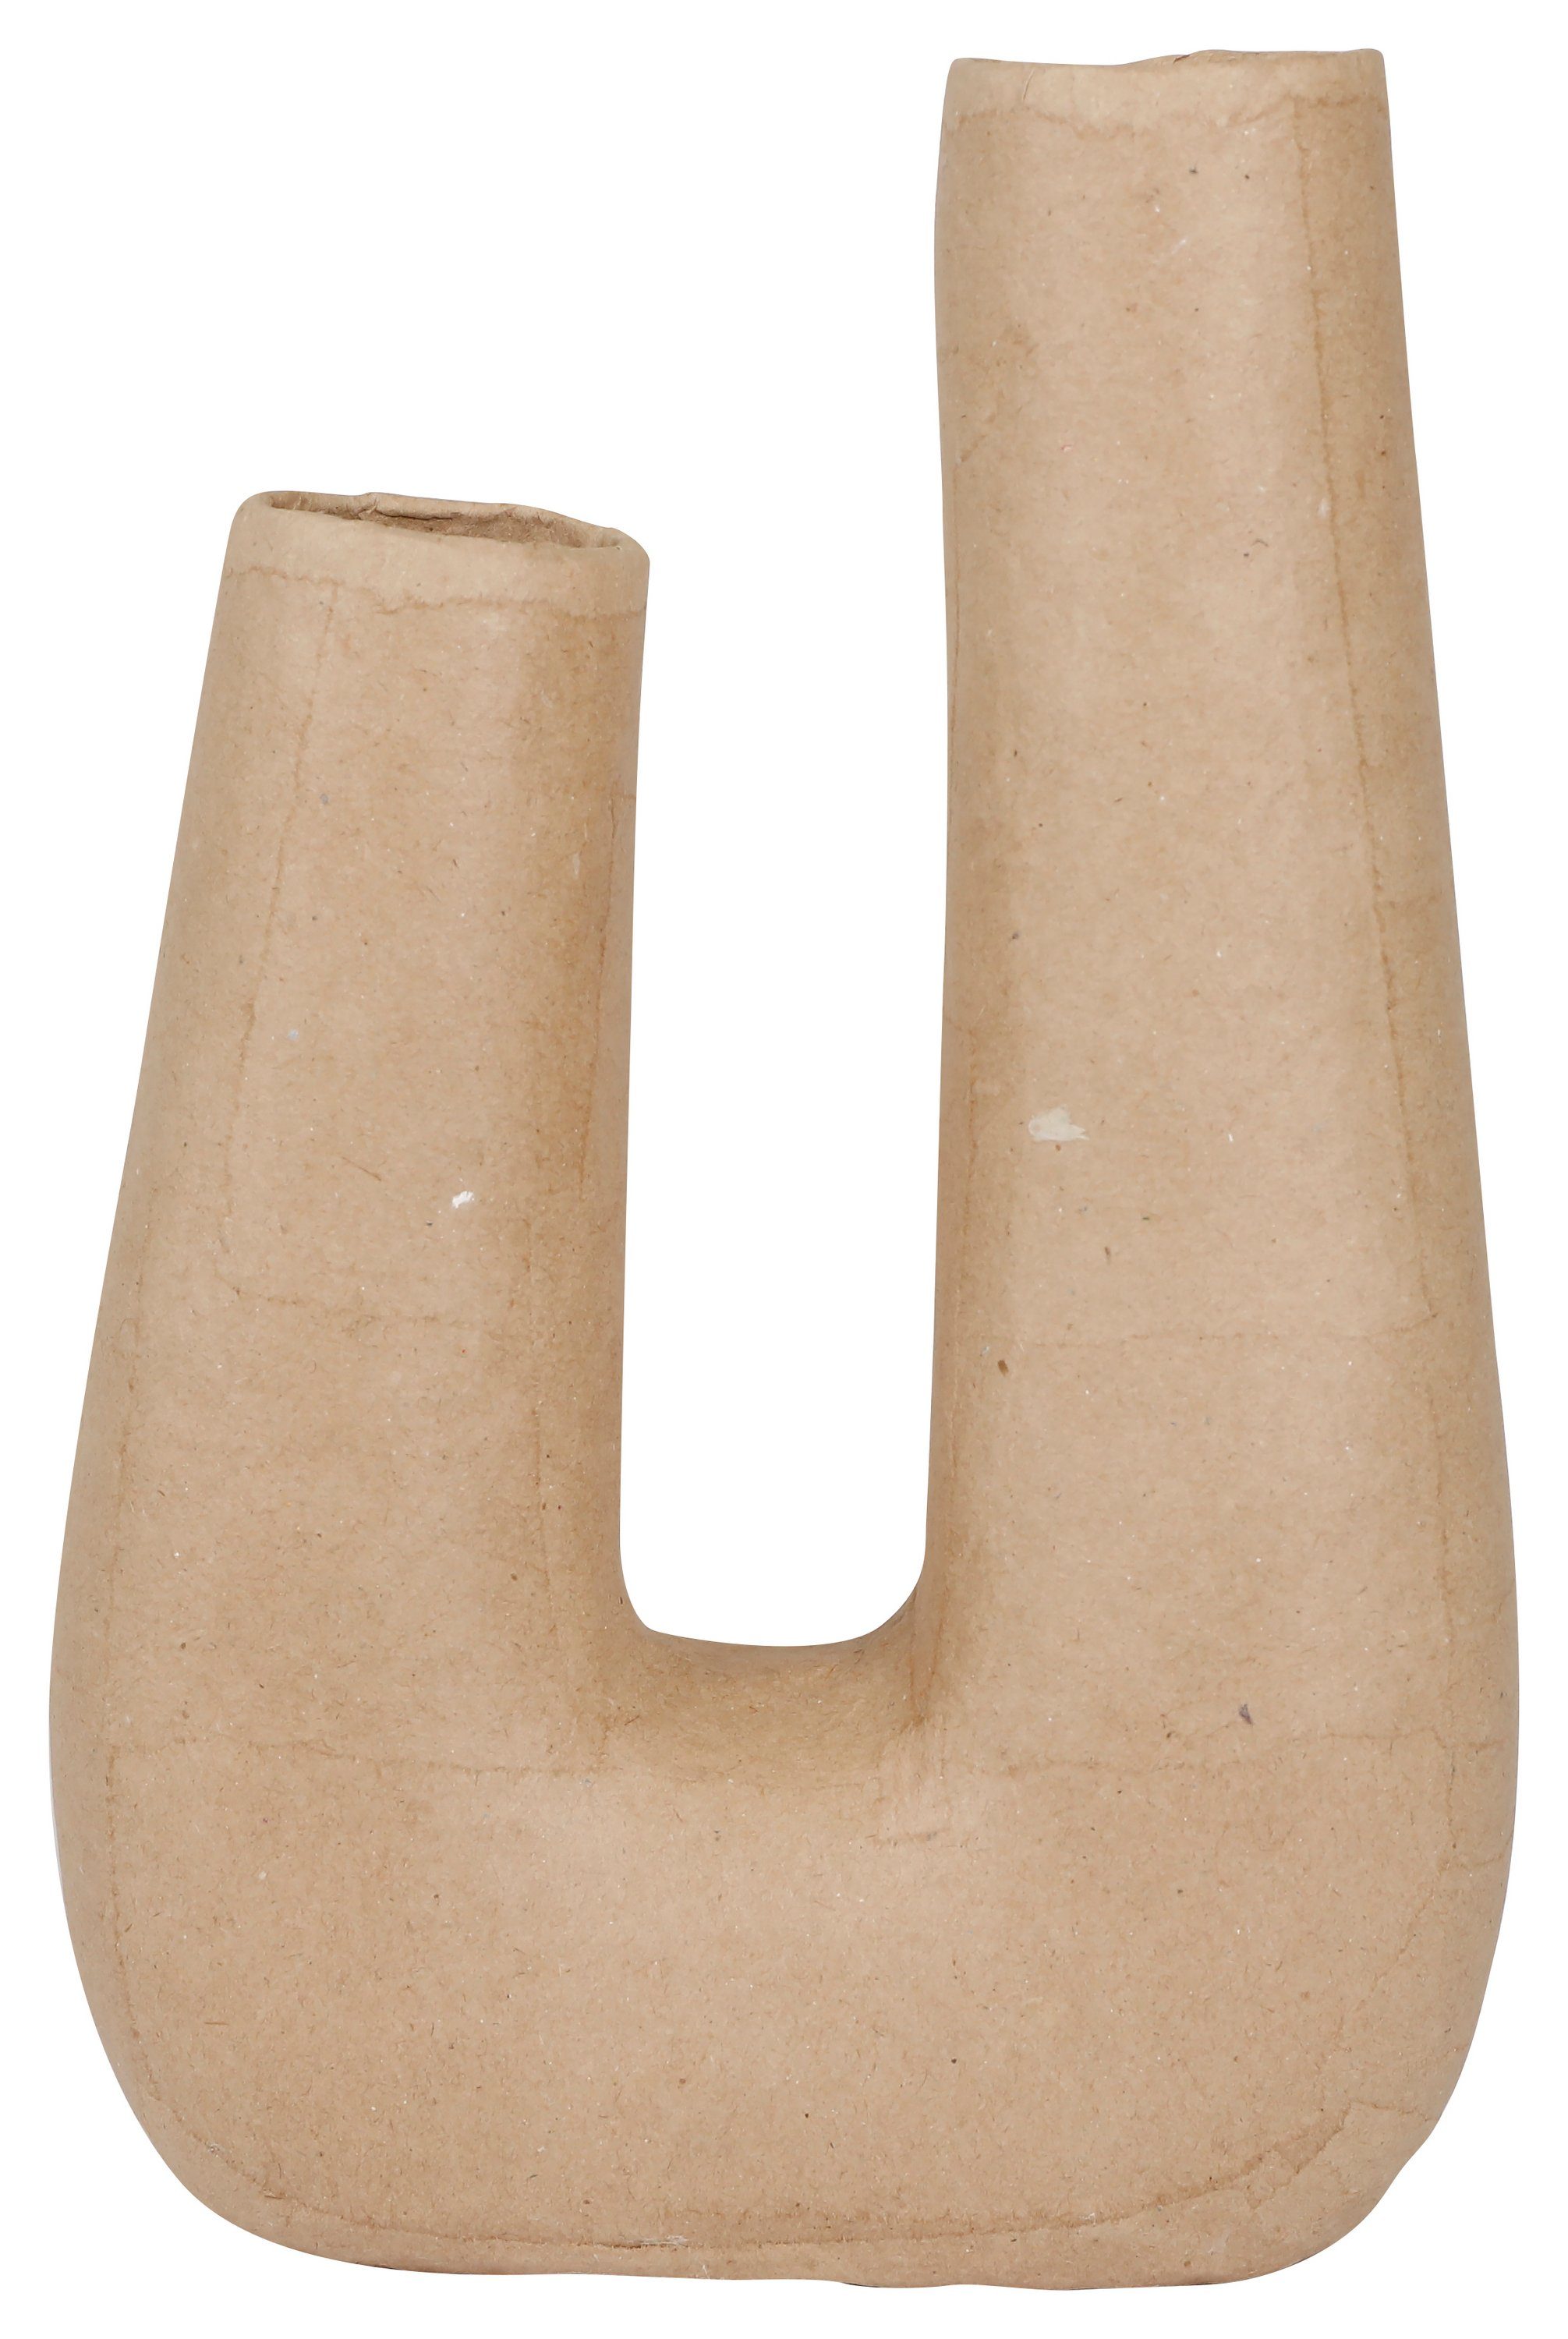 Vase cm décopatch U-Form, Pappmaché Dekovase cm 25 x 16,5 wasserdicht